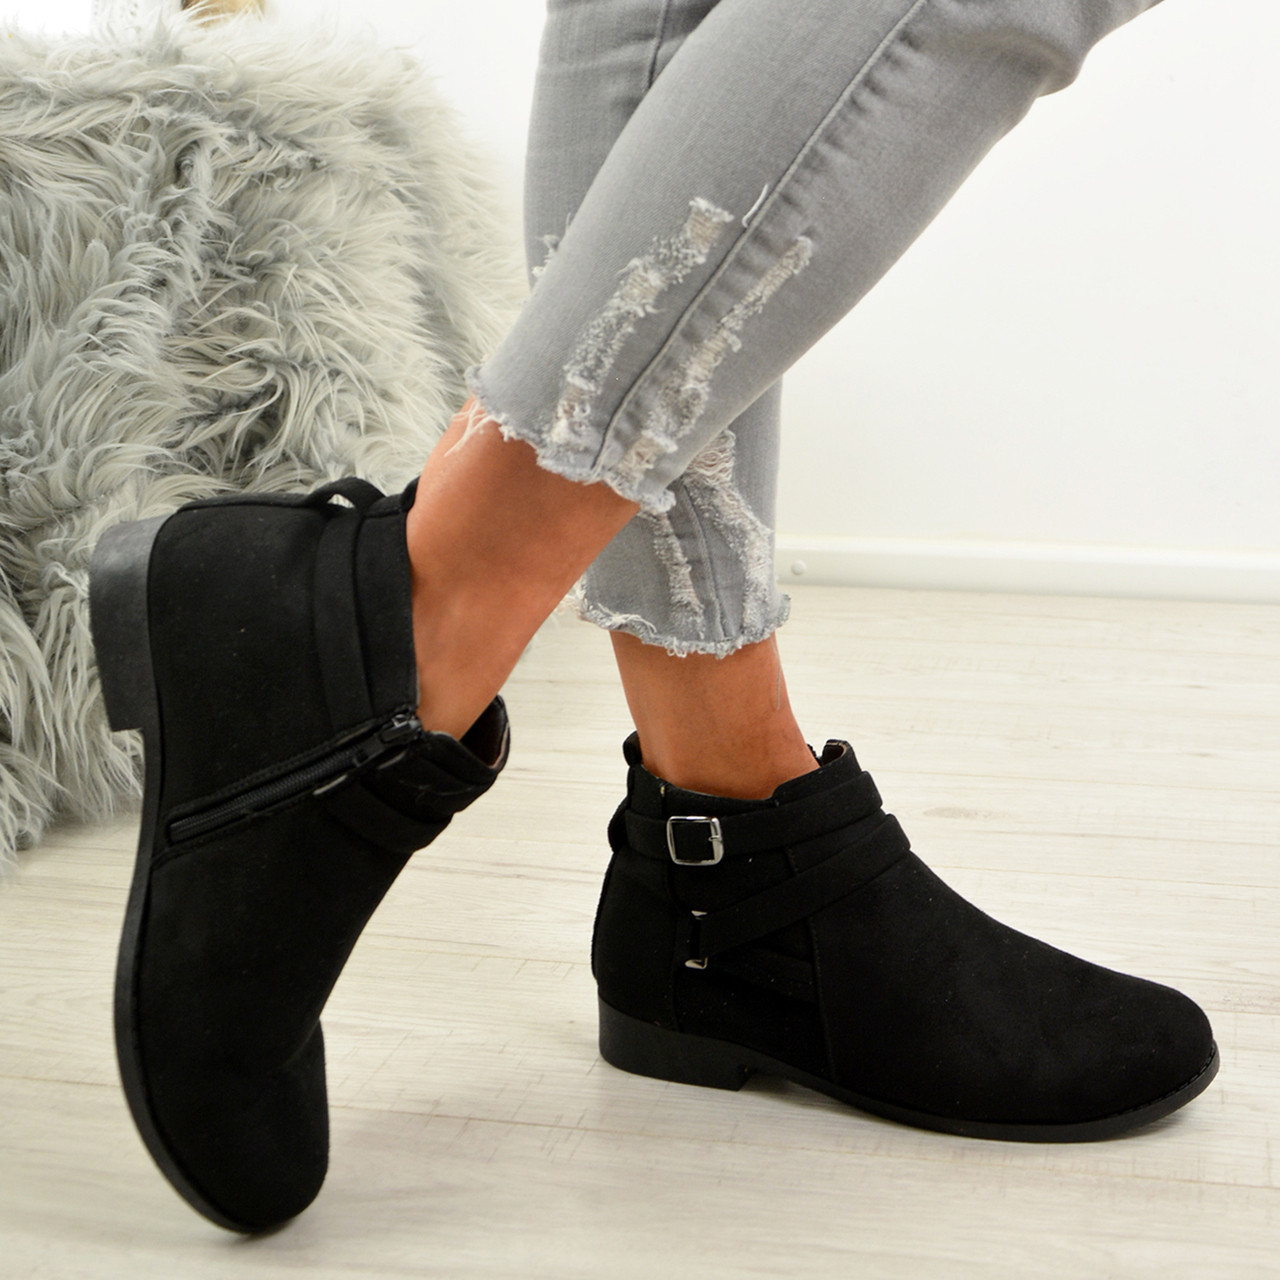 ladies black suede ankle boots uk